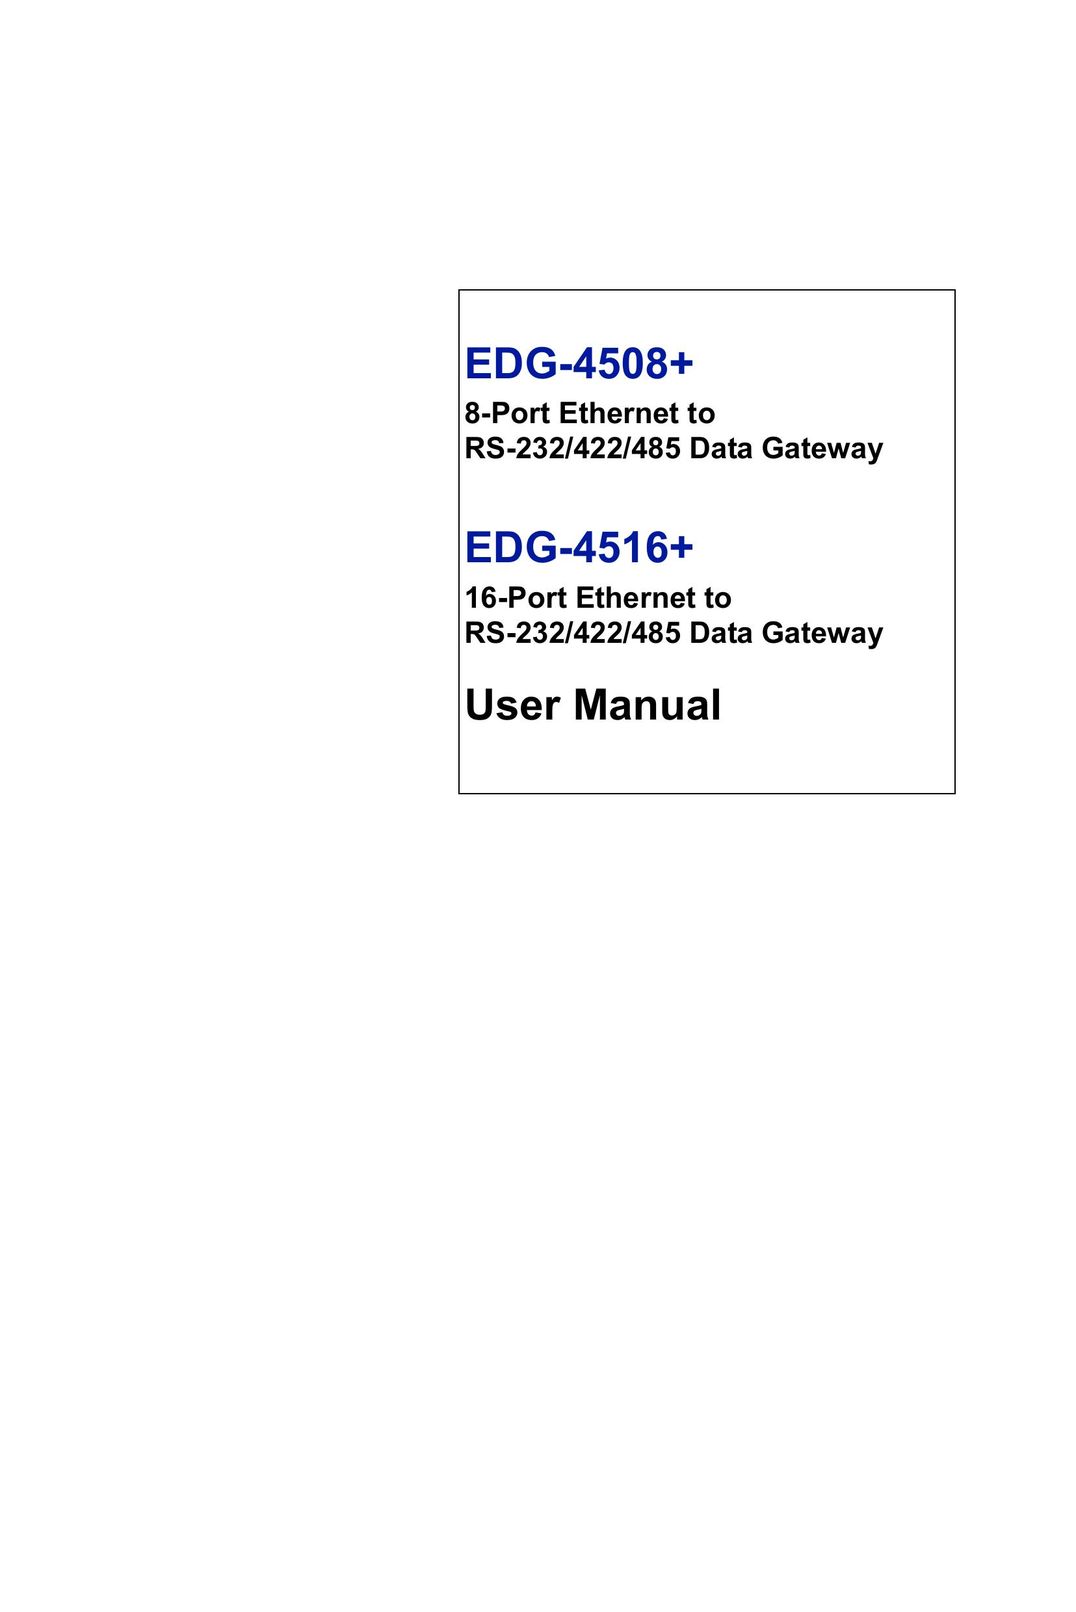 Vicks EDG-4508+ Network Router User Manual